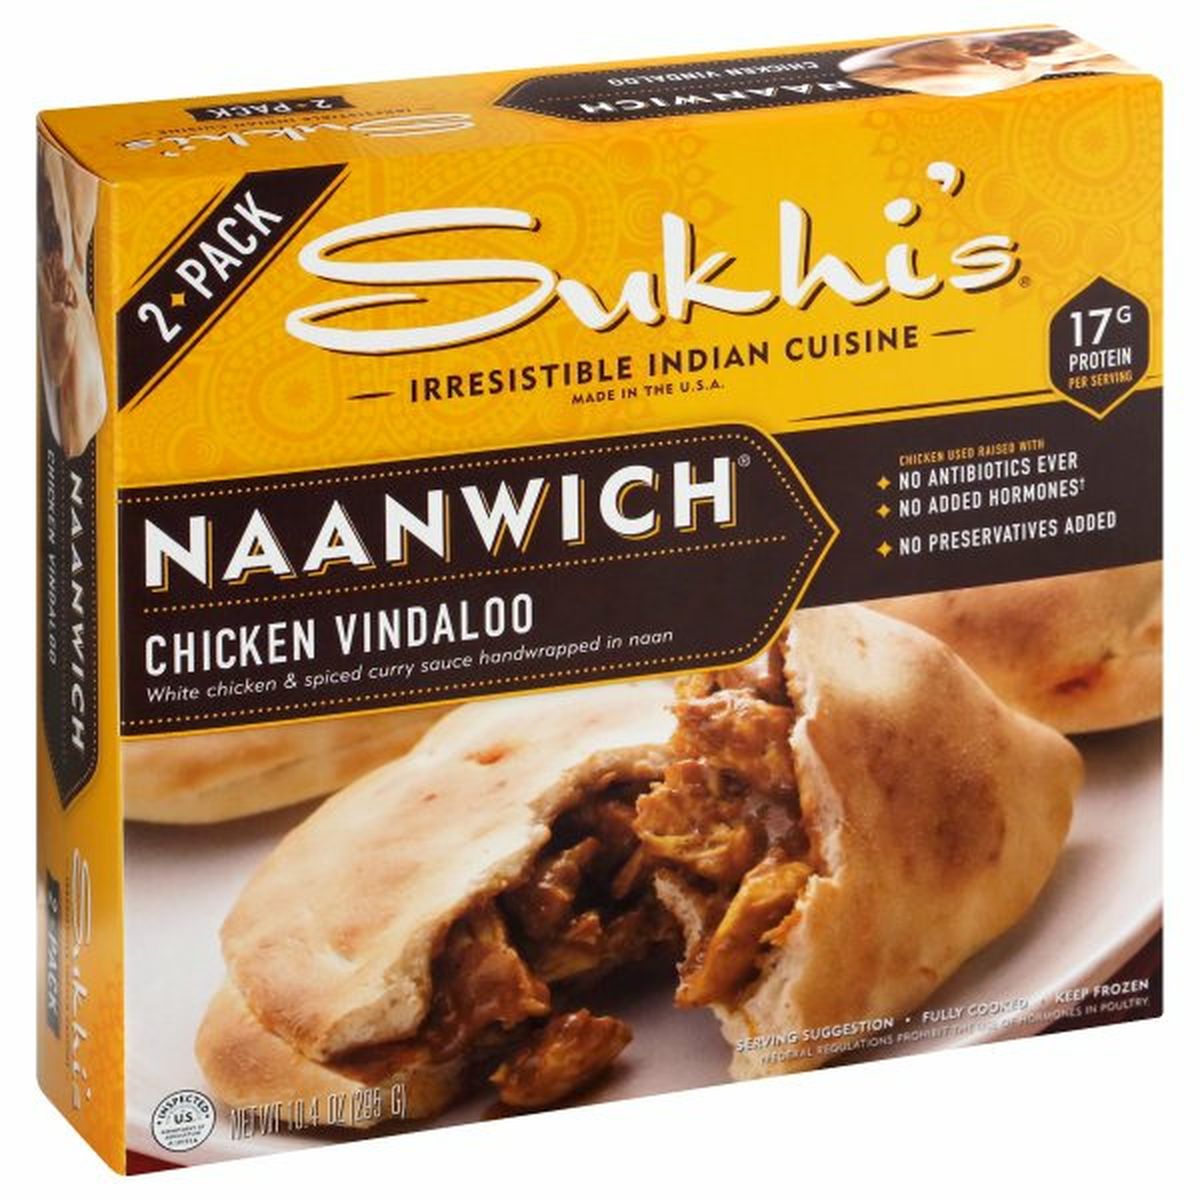 Calories in Sukhi's Naanwich, Chicken Vindaloo, 2 Pack